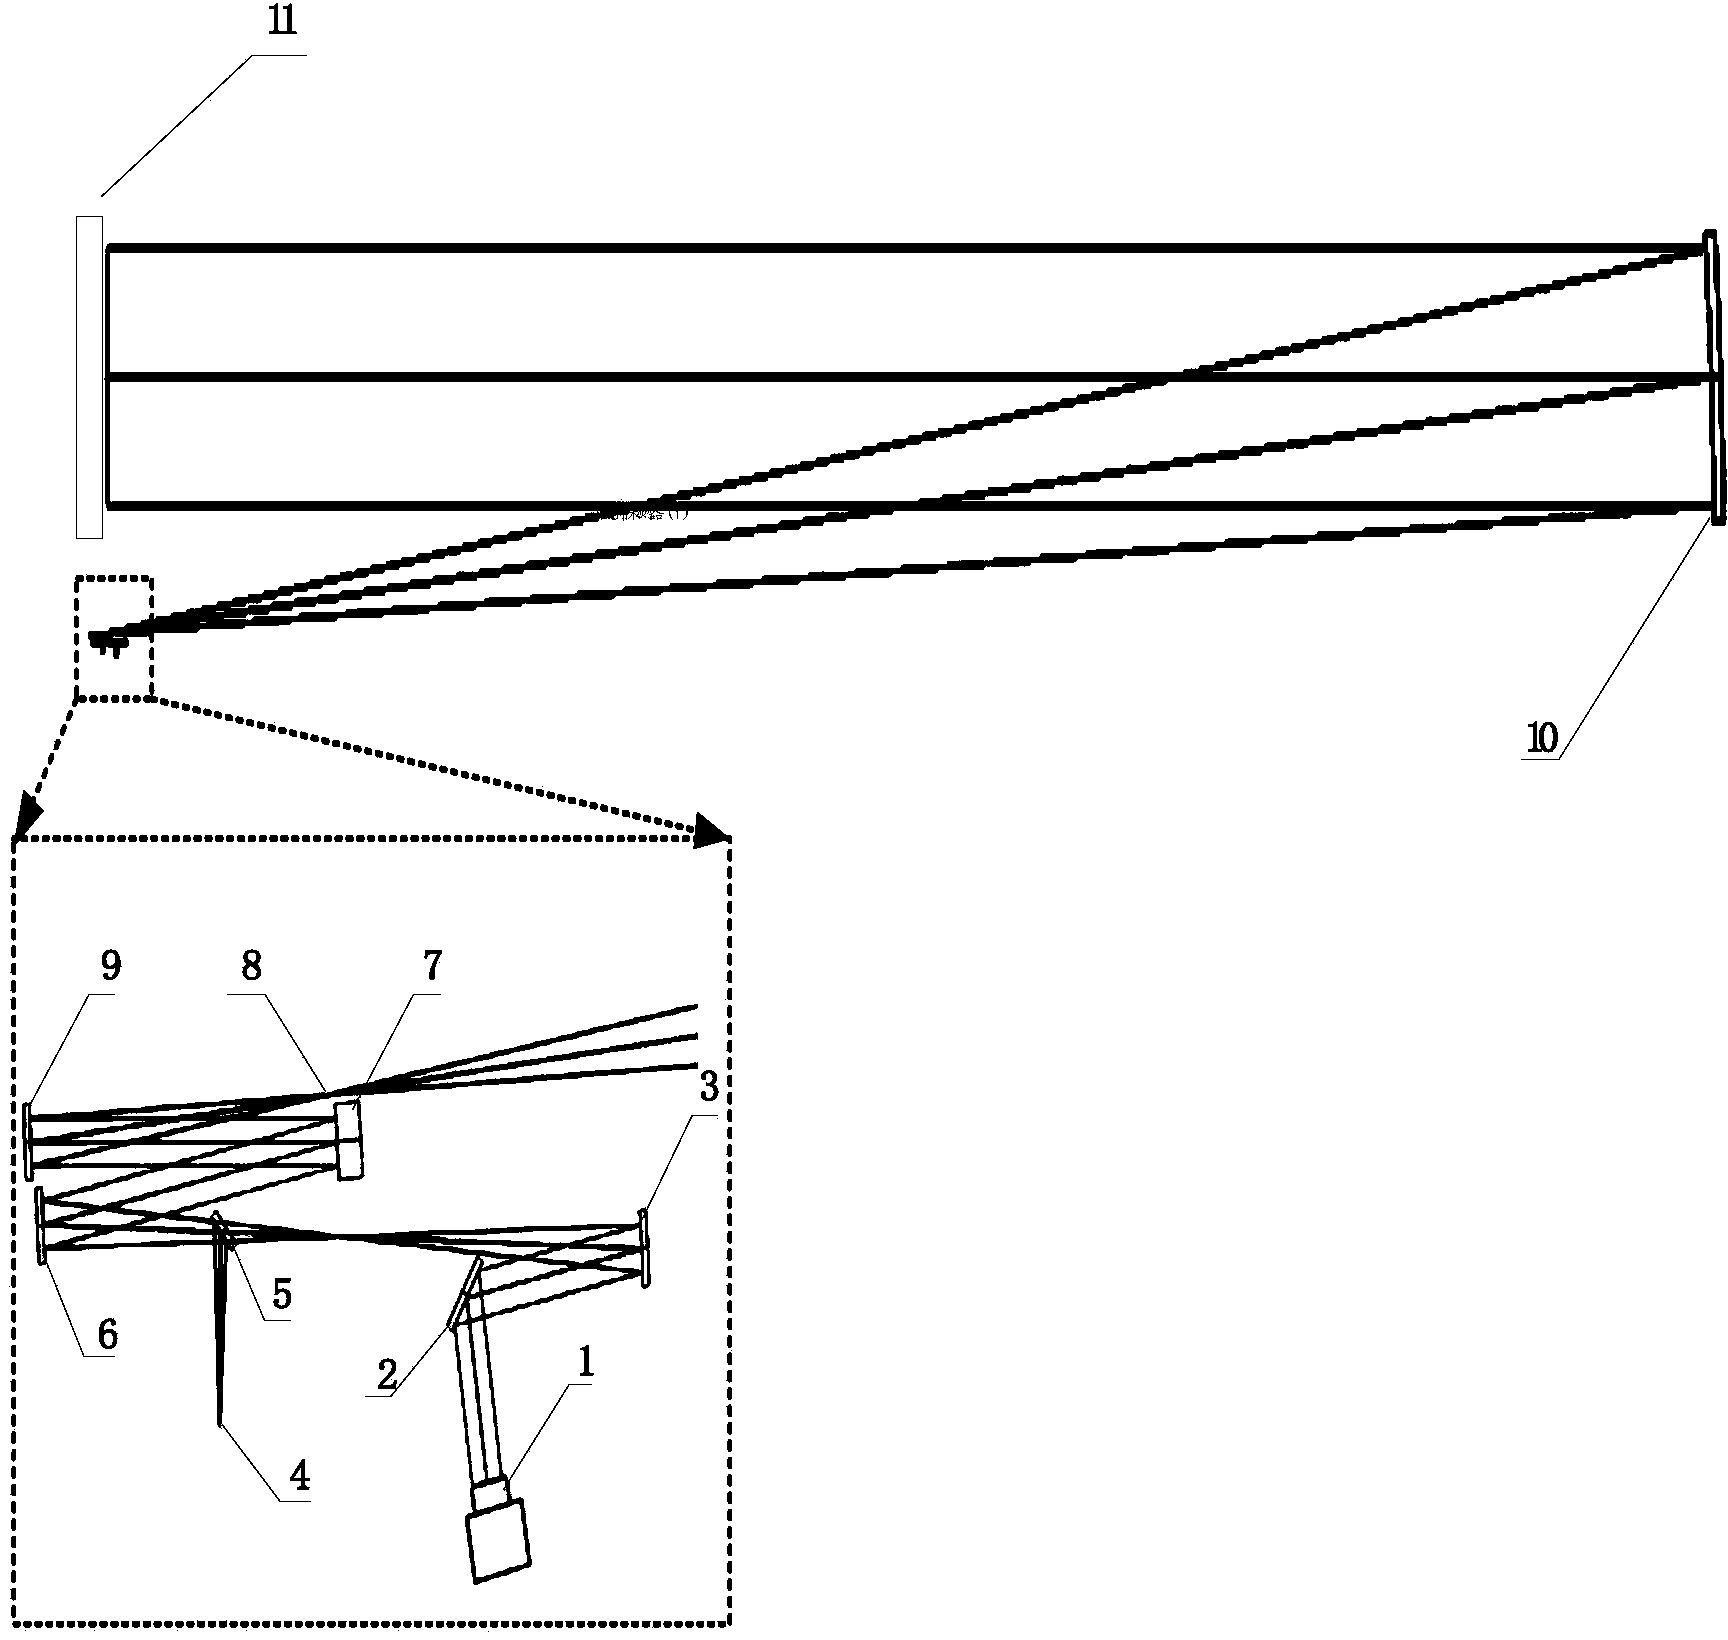 Parallel light tube wave-front aberration pre-compensation device based on adaptive optics